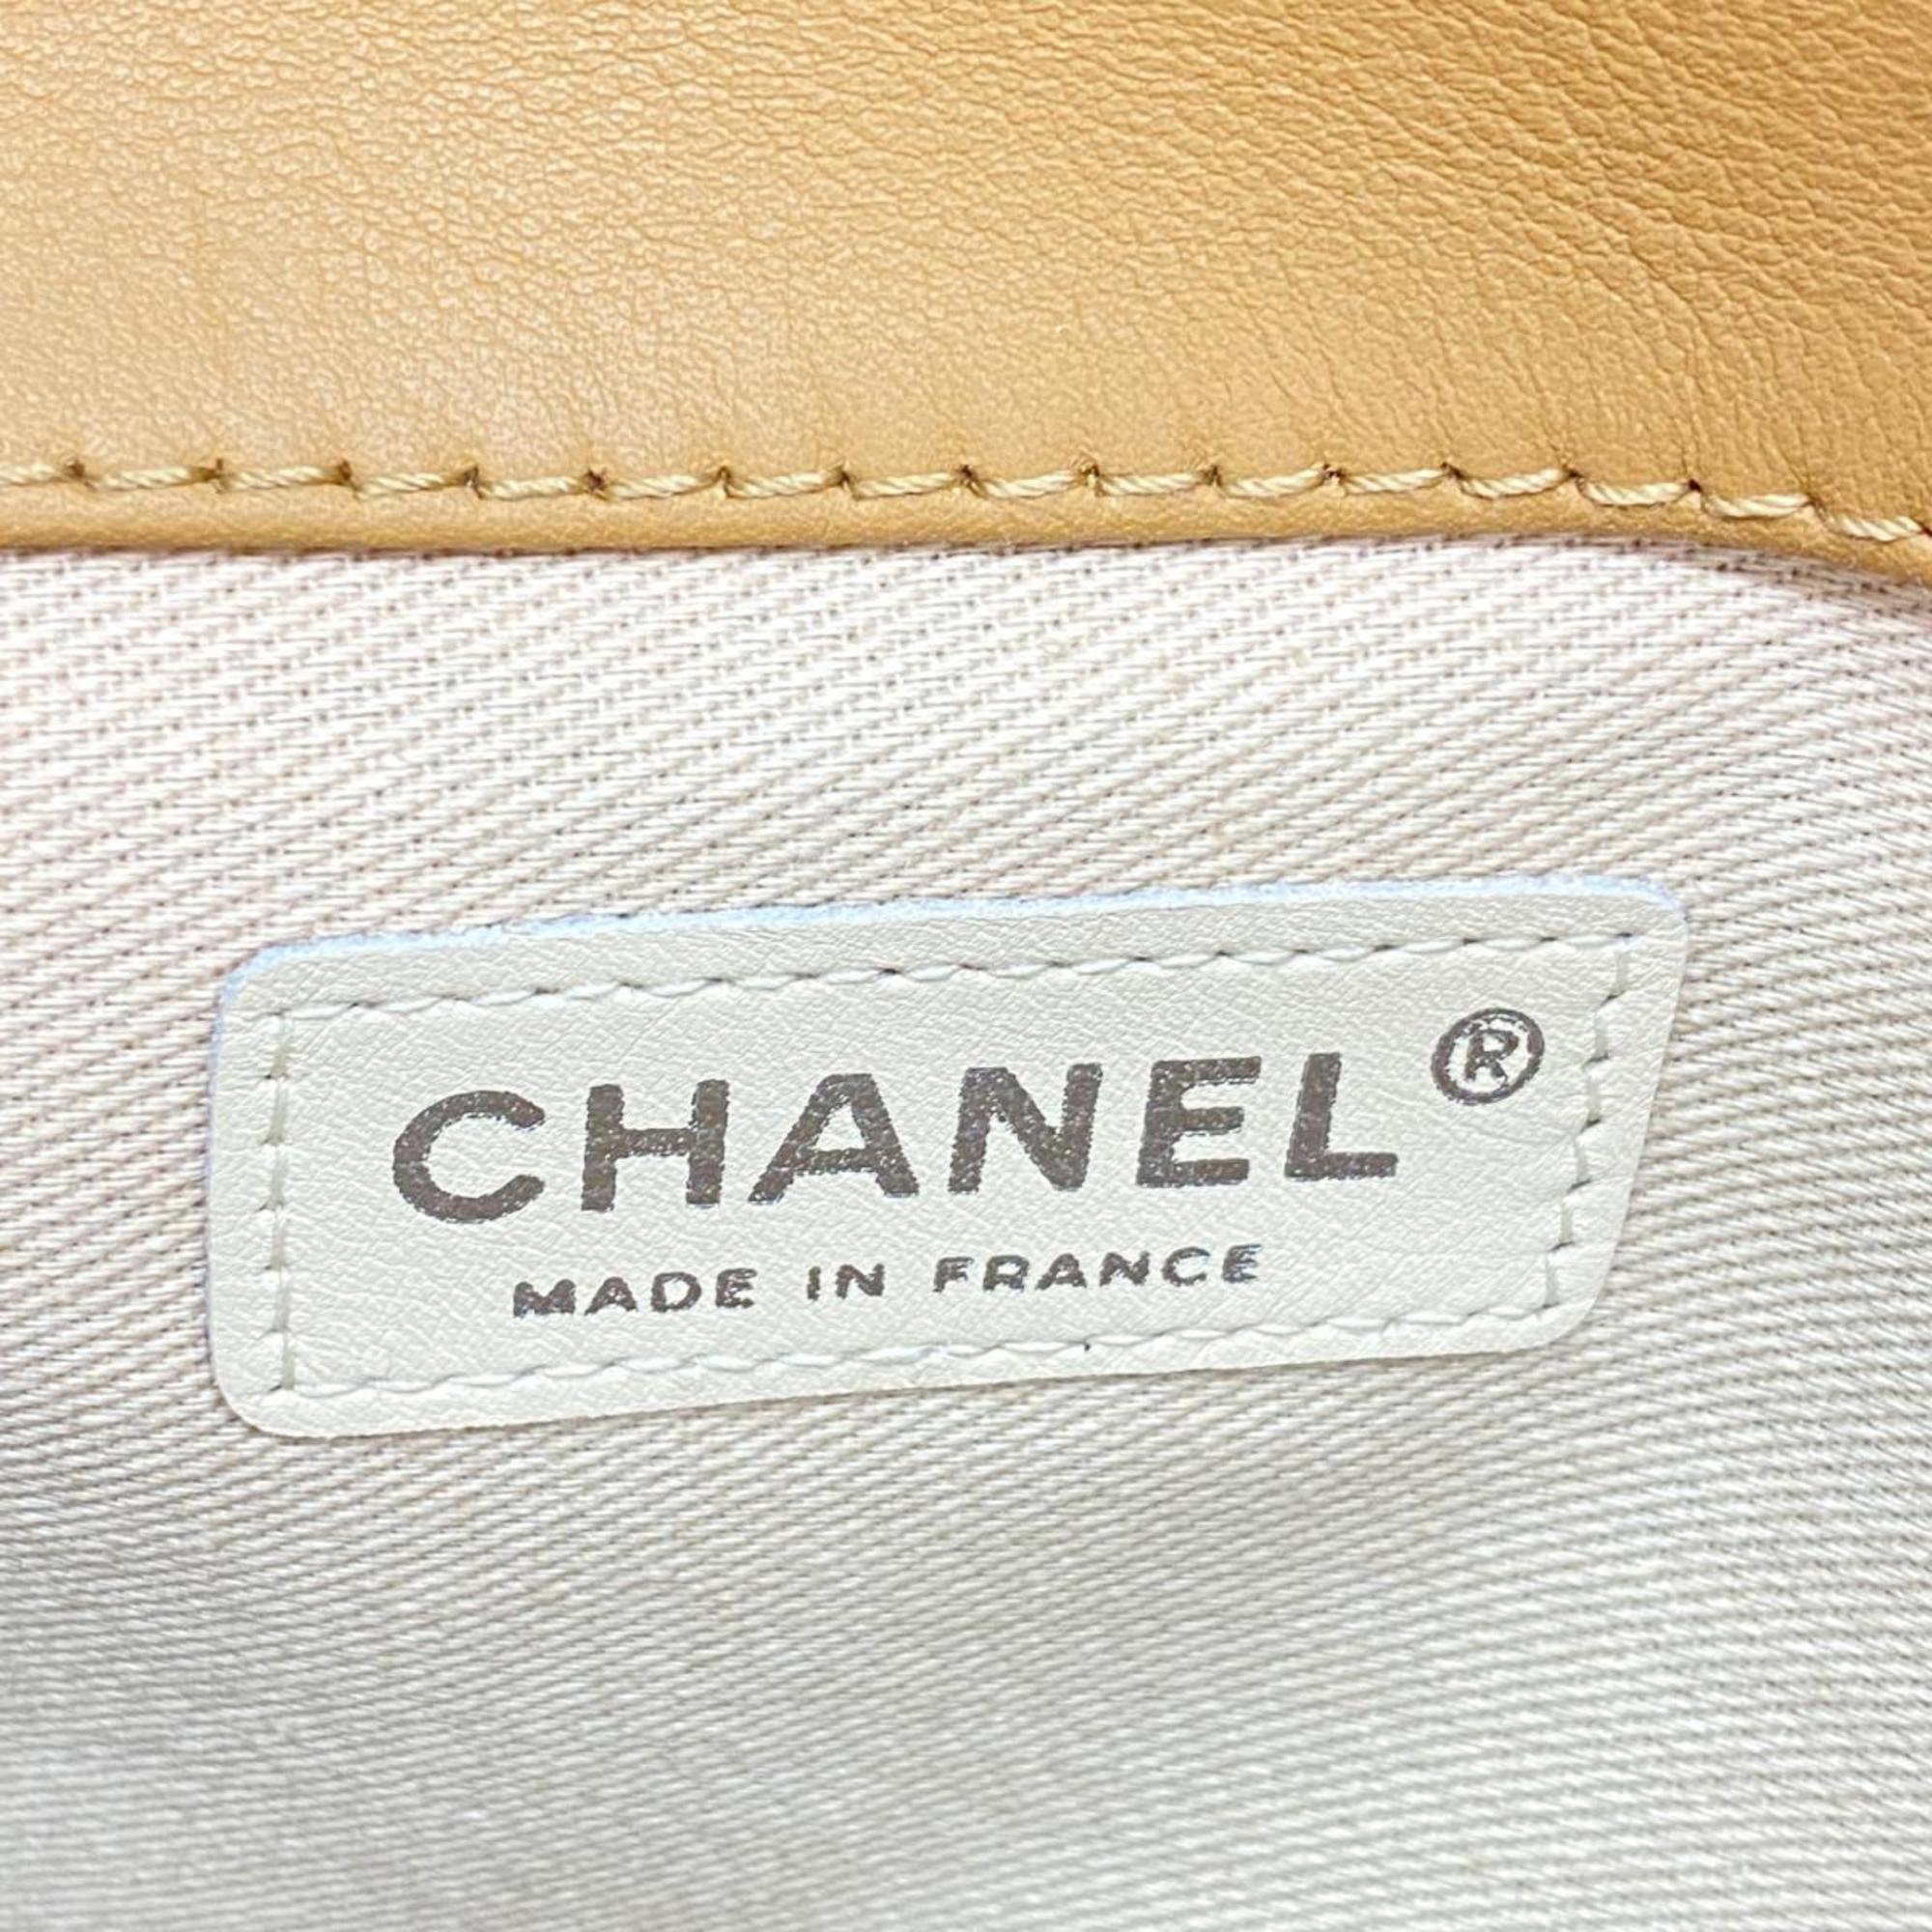 Chanel Shoulder Bag Chocolate Bar 2.55 Leather Beige Women's